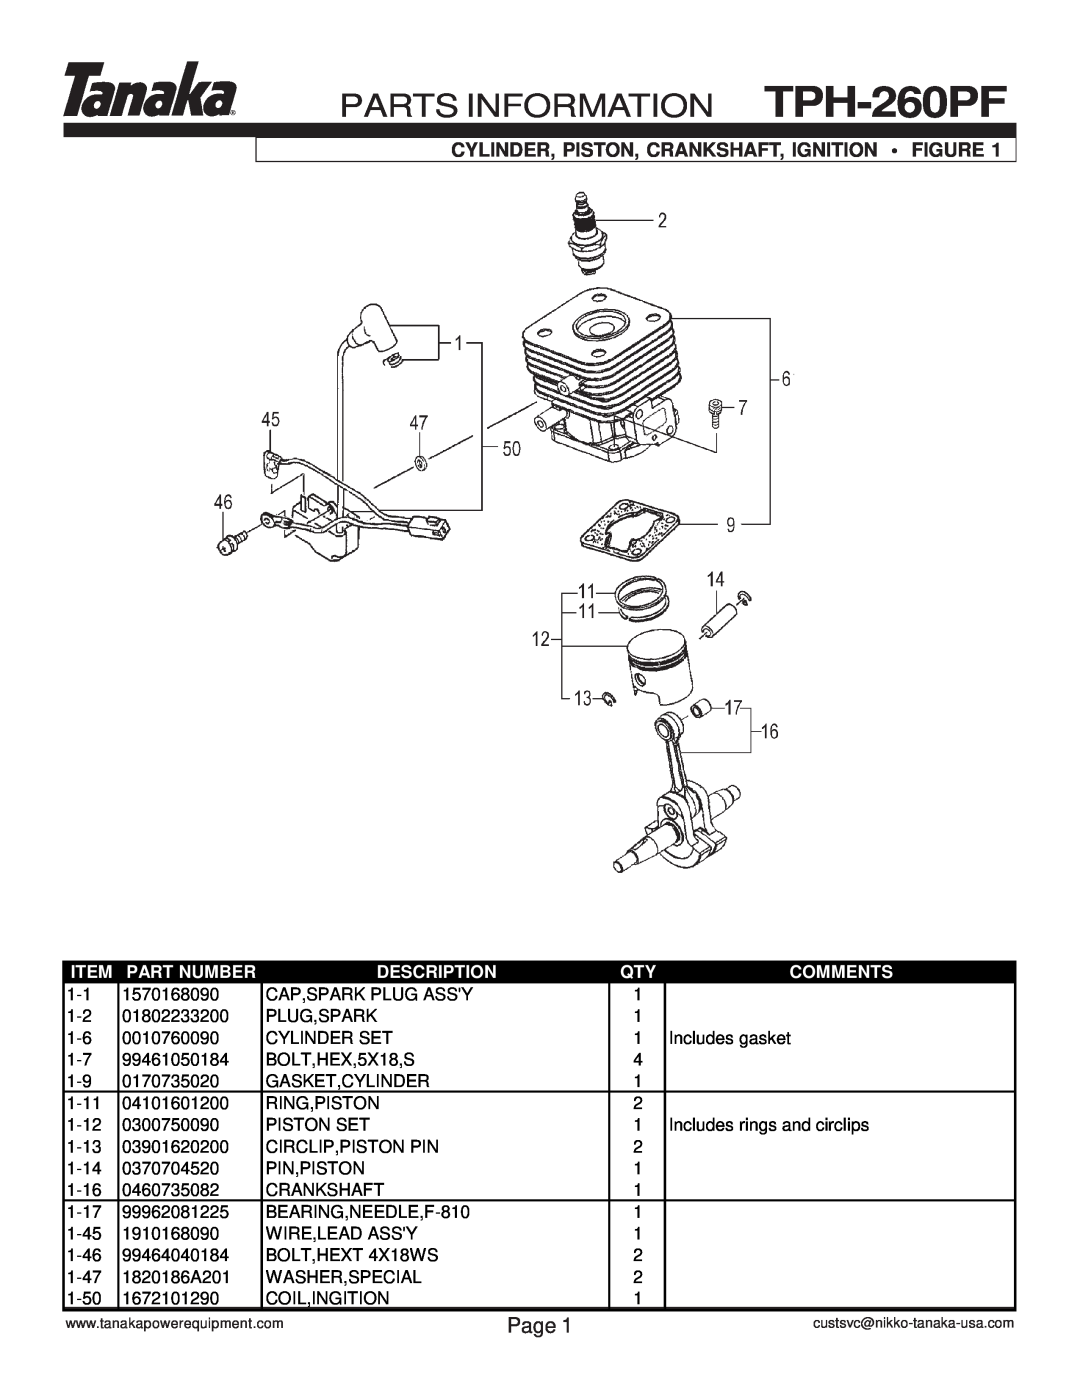 Tanaka manual PARTS INFORMATION TPH-260PF, Cylinder, Piston, Crankshaft, Ignition Figure, Page, Part Number, Description 